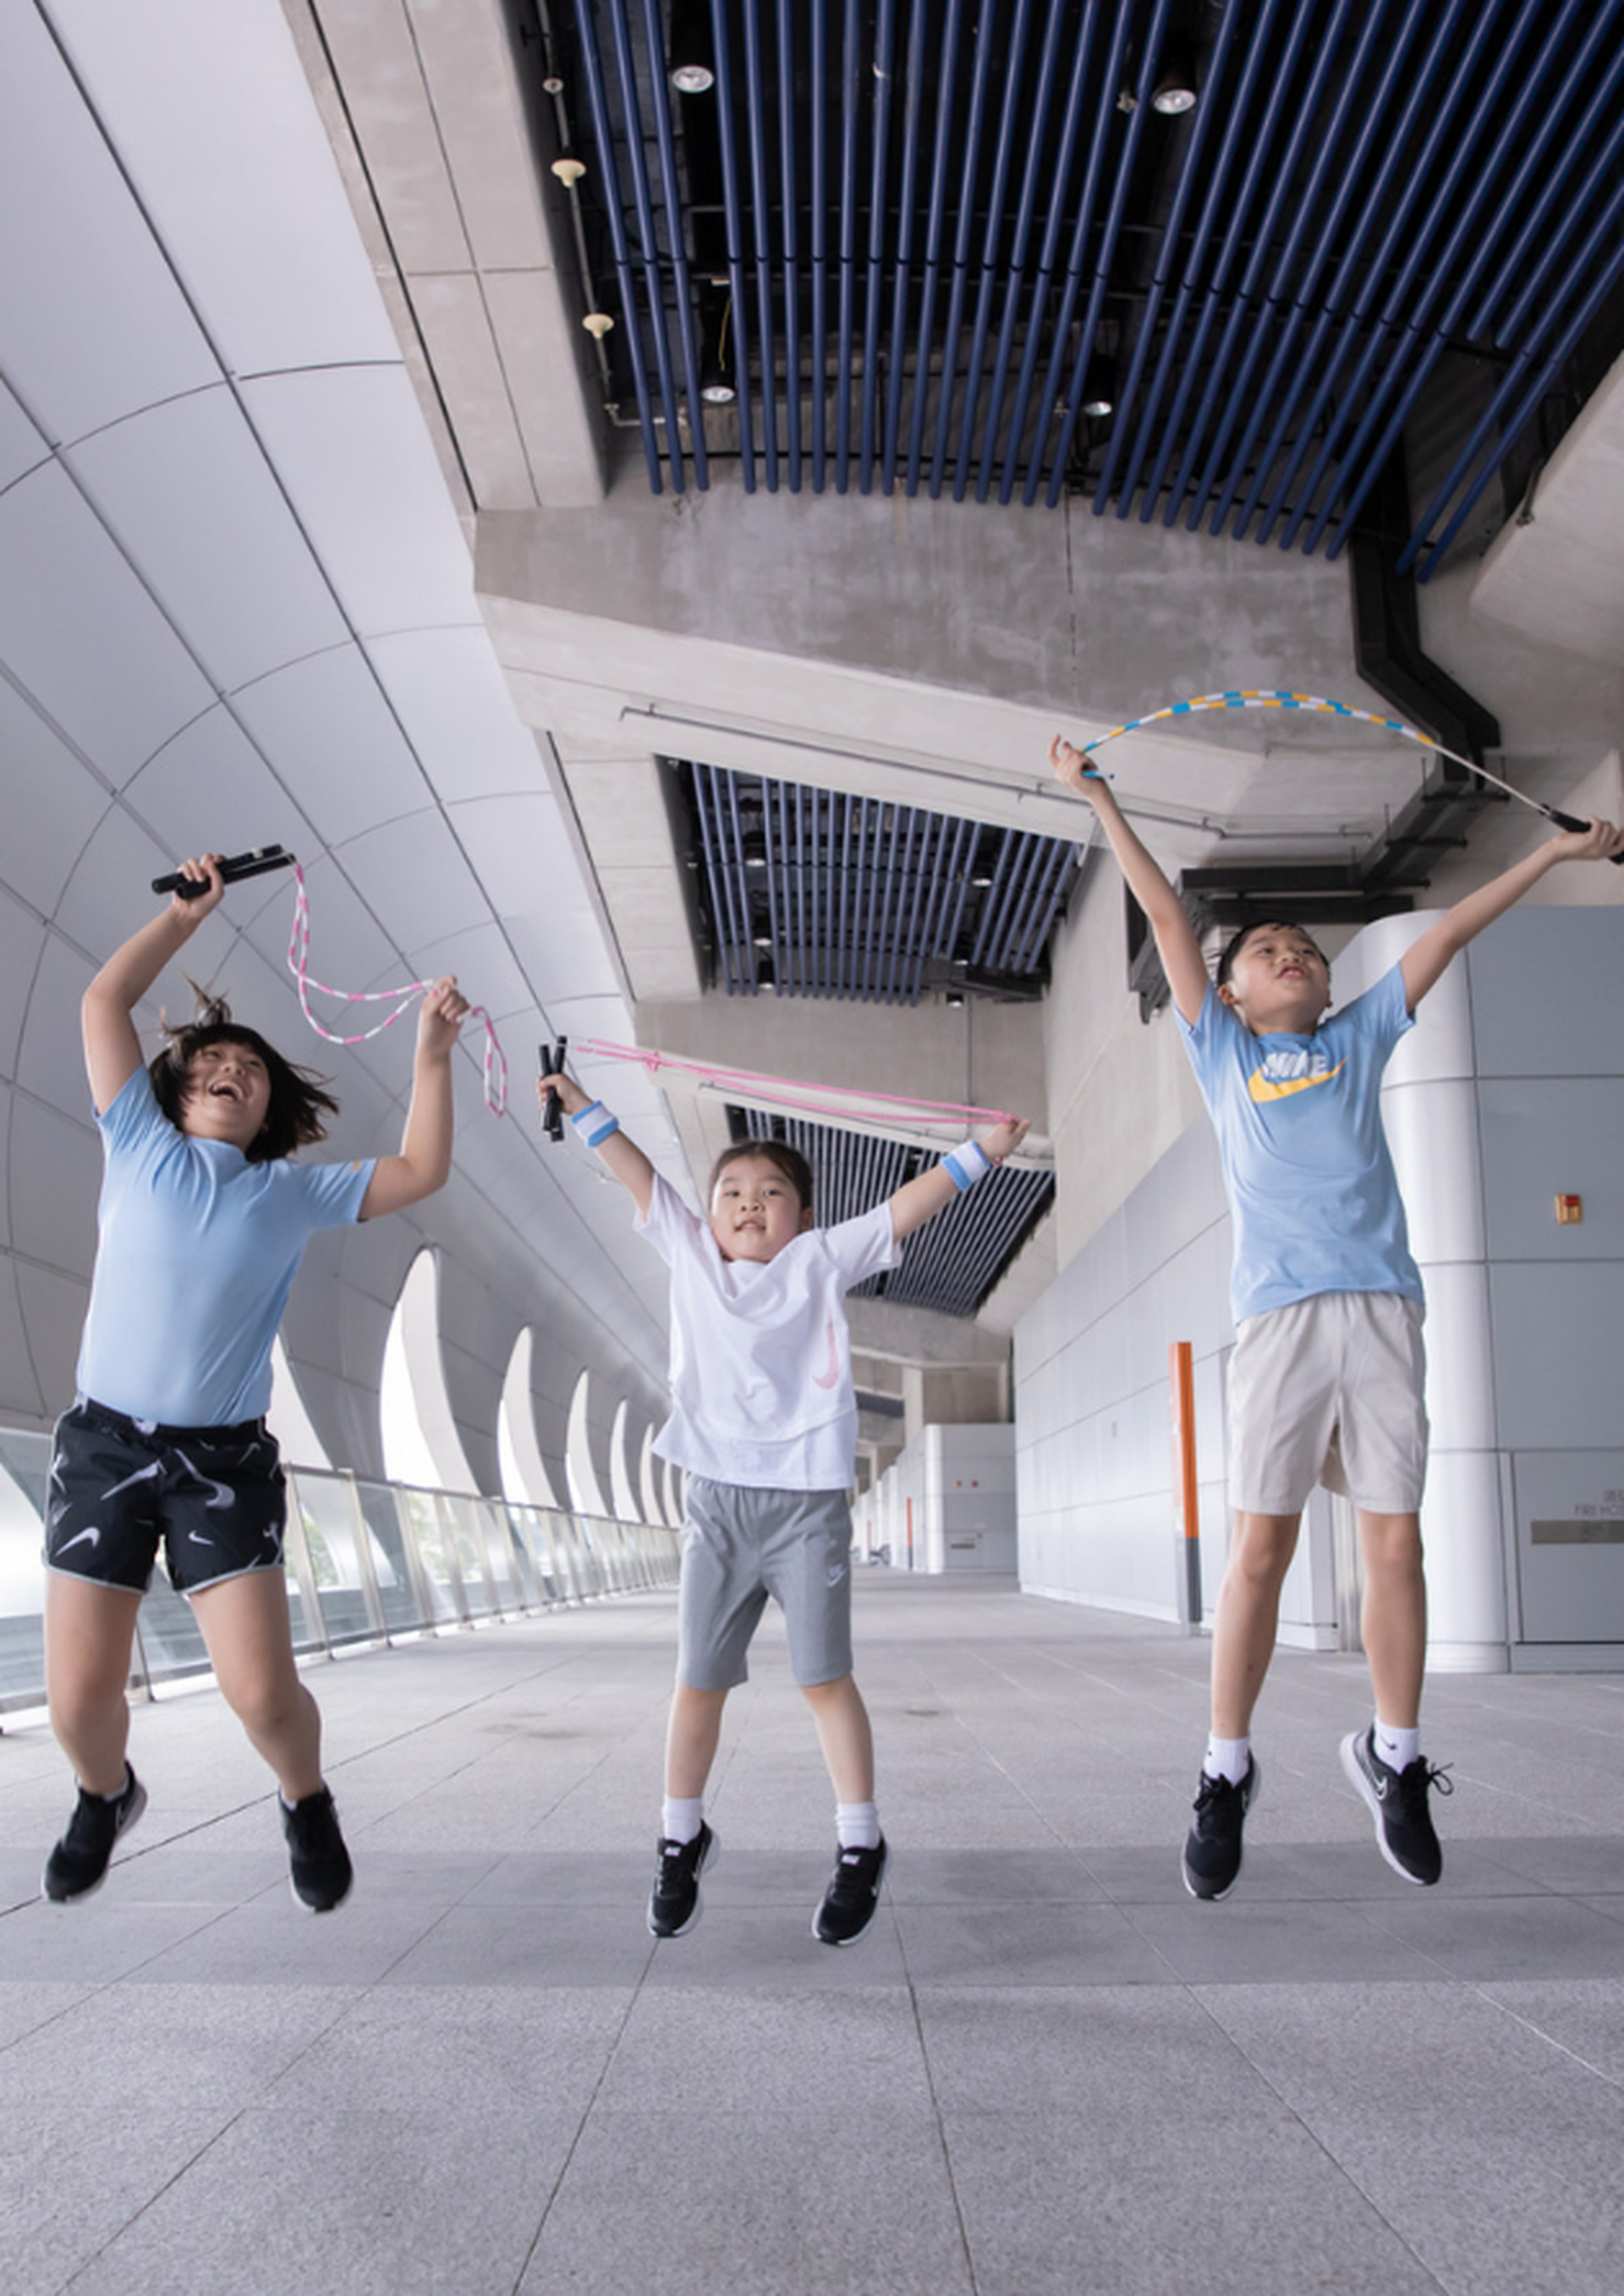 Nike Jump Rope Camps X 三屆跳繩世界冠軍教練團Super Master - 跳繩能力證書課程 (4-12歲)